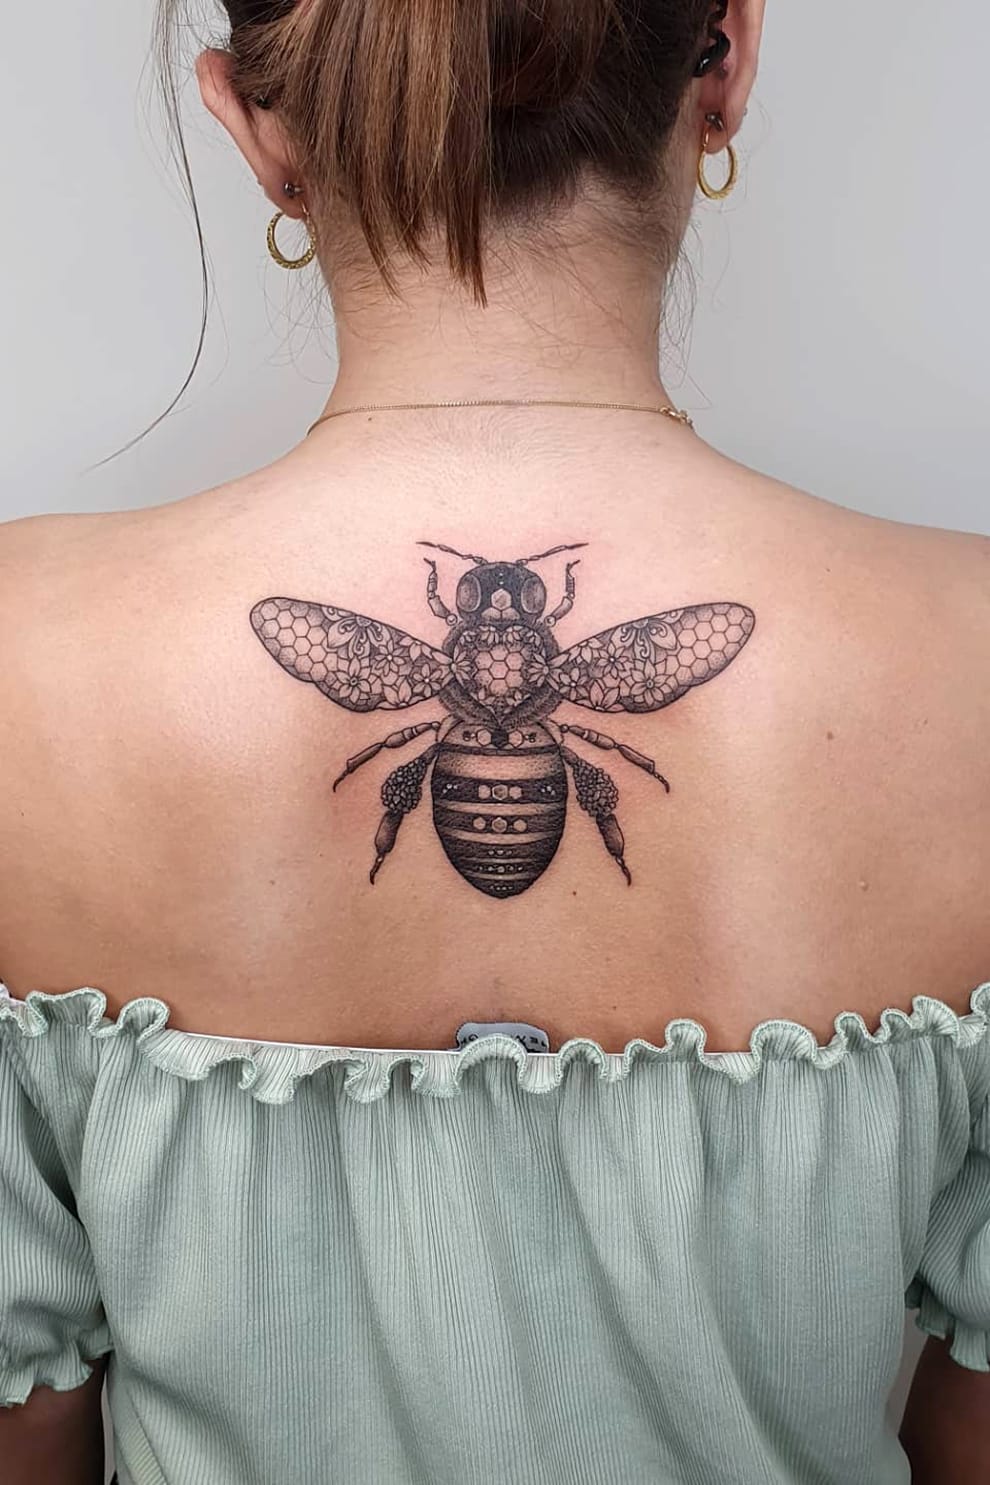 Bee tattoo on back